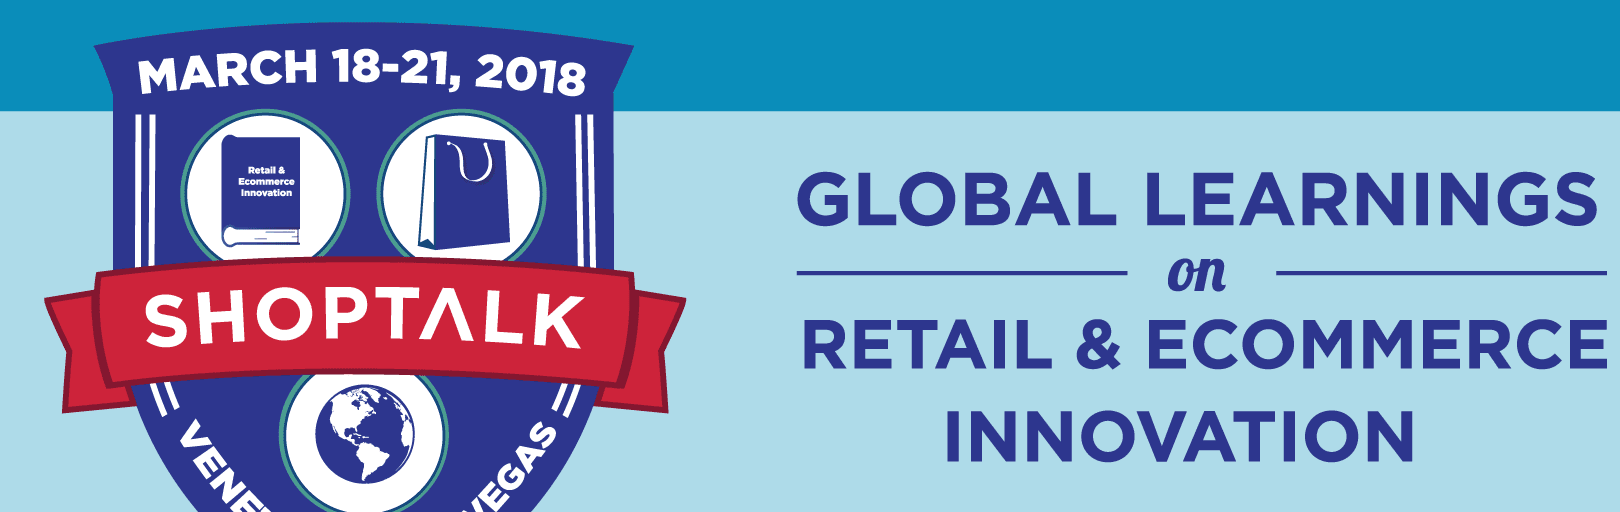 Shoptalk - Global Learnings on Retail & Ecommerce Innovation -- March 18-21, 2018 -- Venetian, Las Vegas